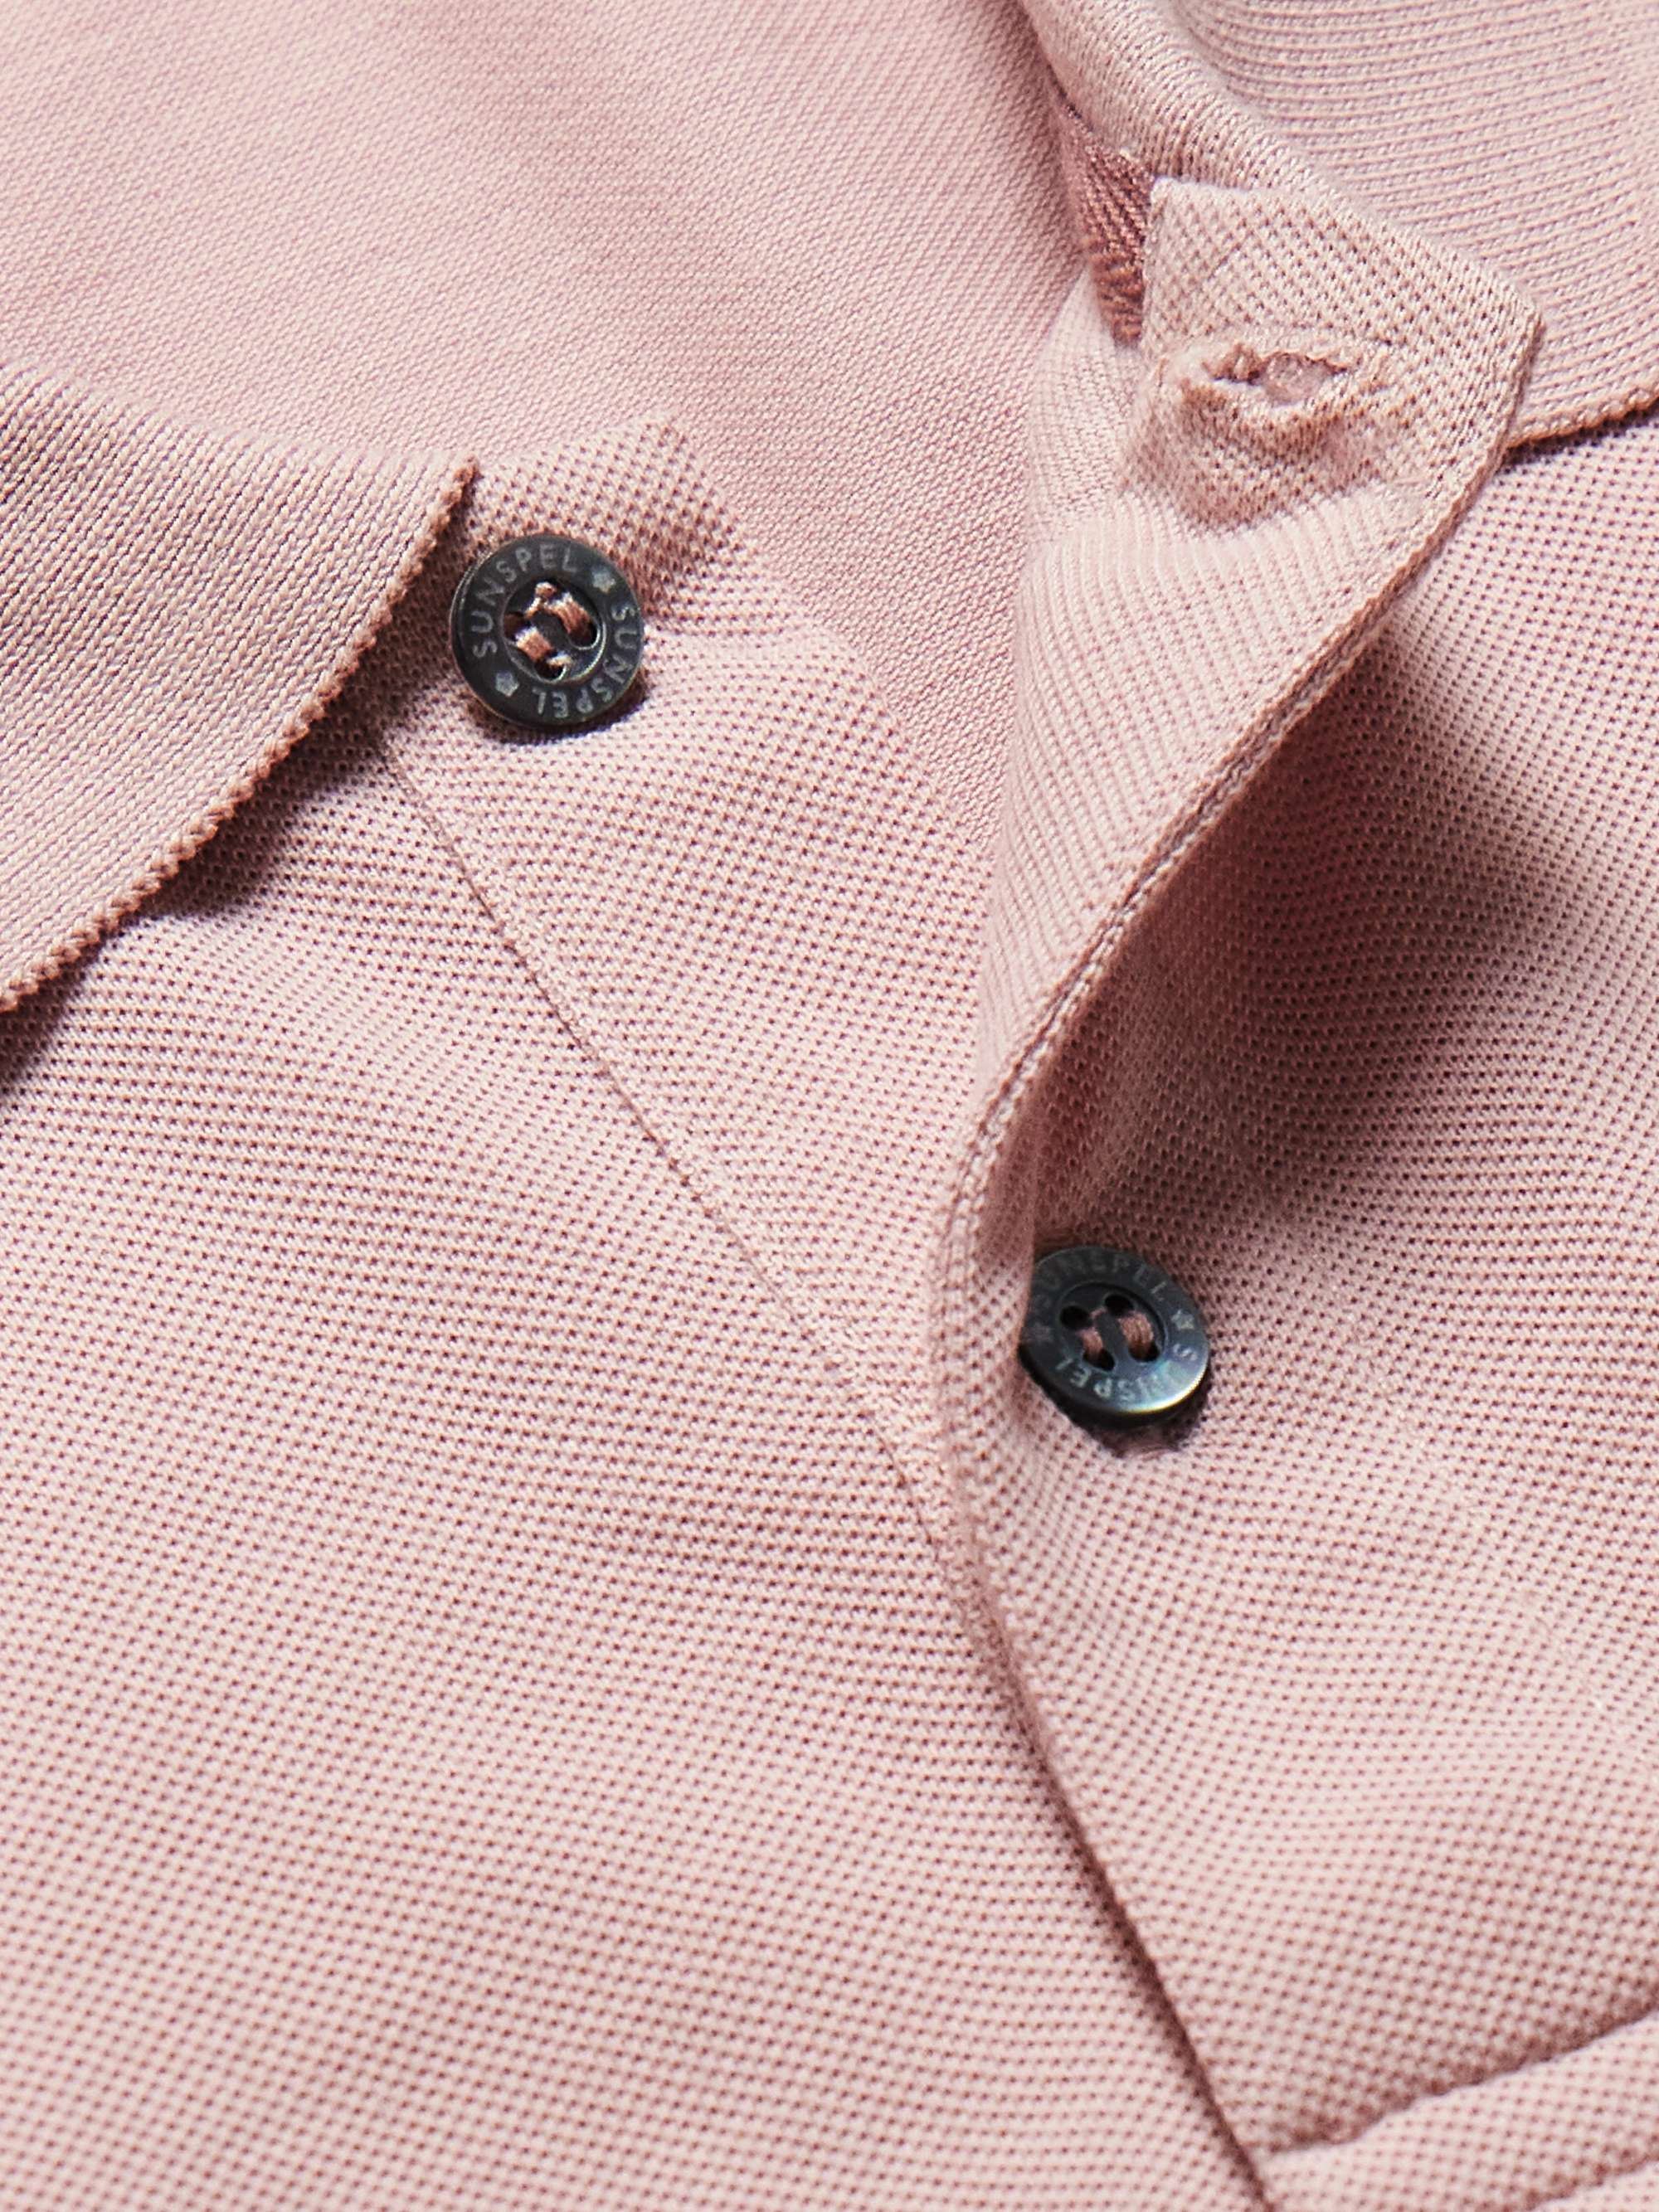 SUNSPEL Cotton-Piqué Polo Shirt